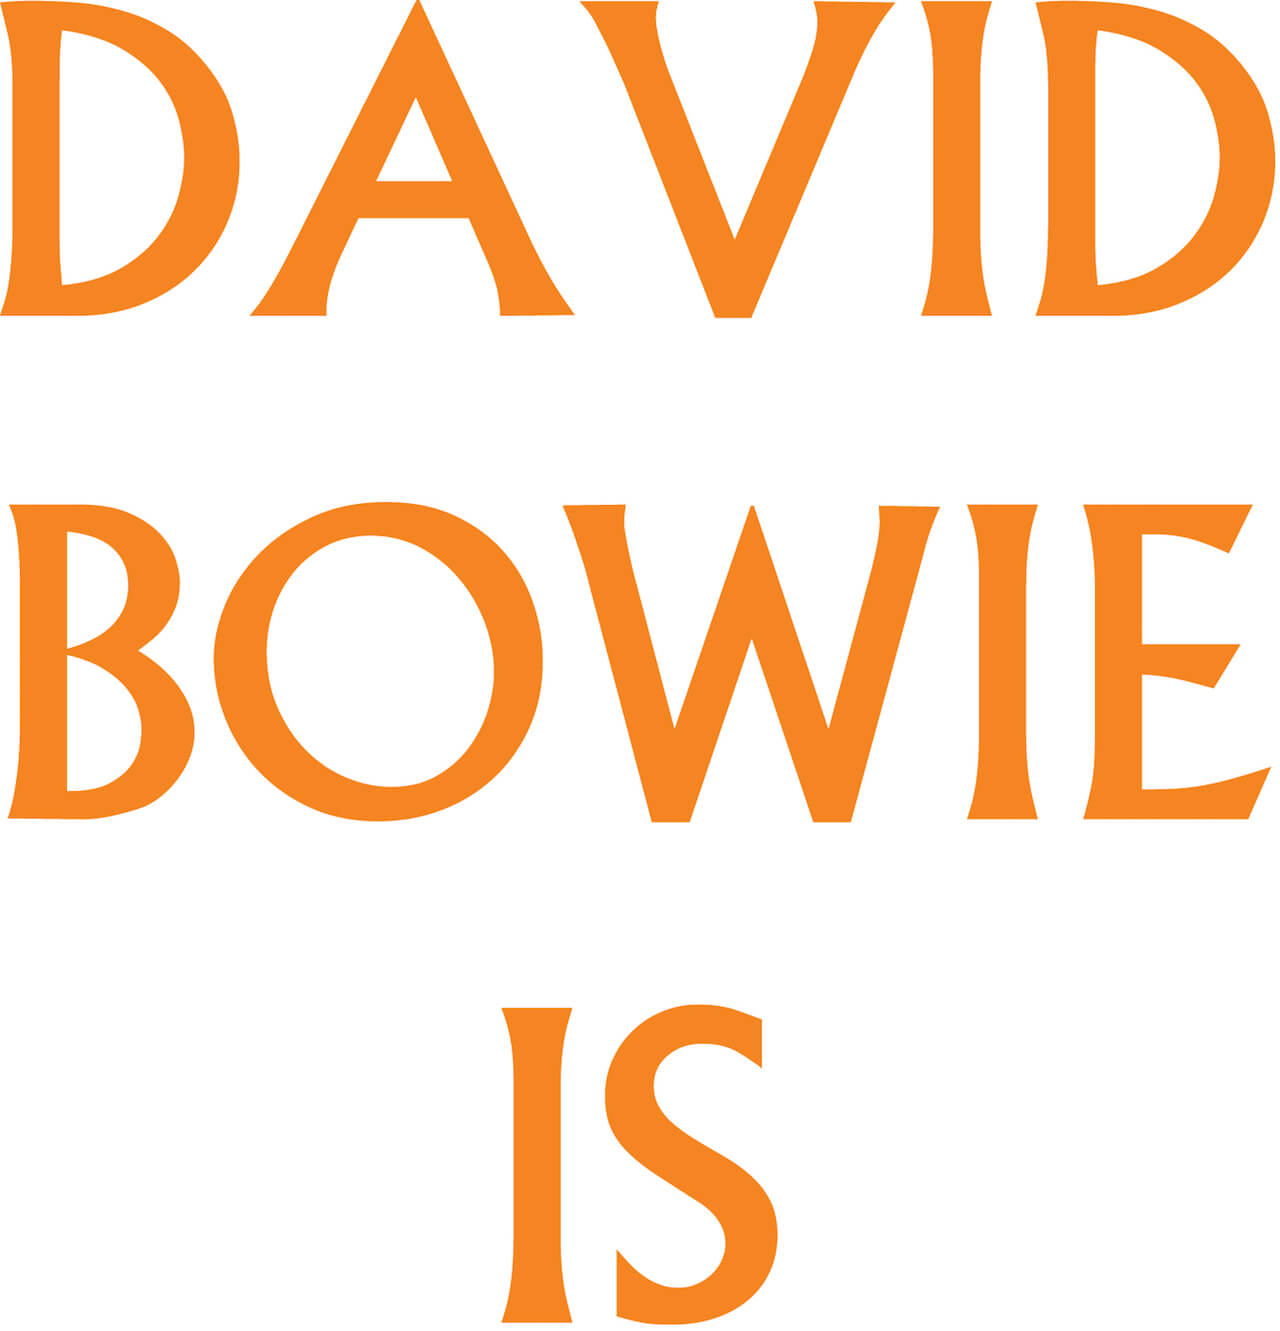 DAVID BOWIE is